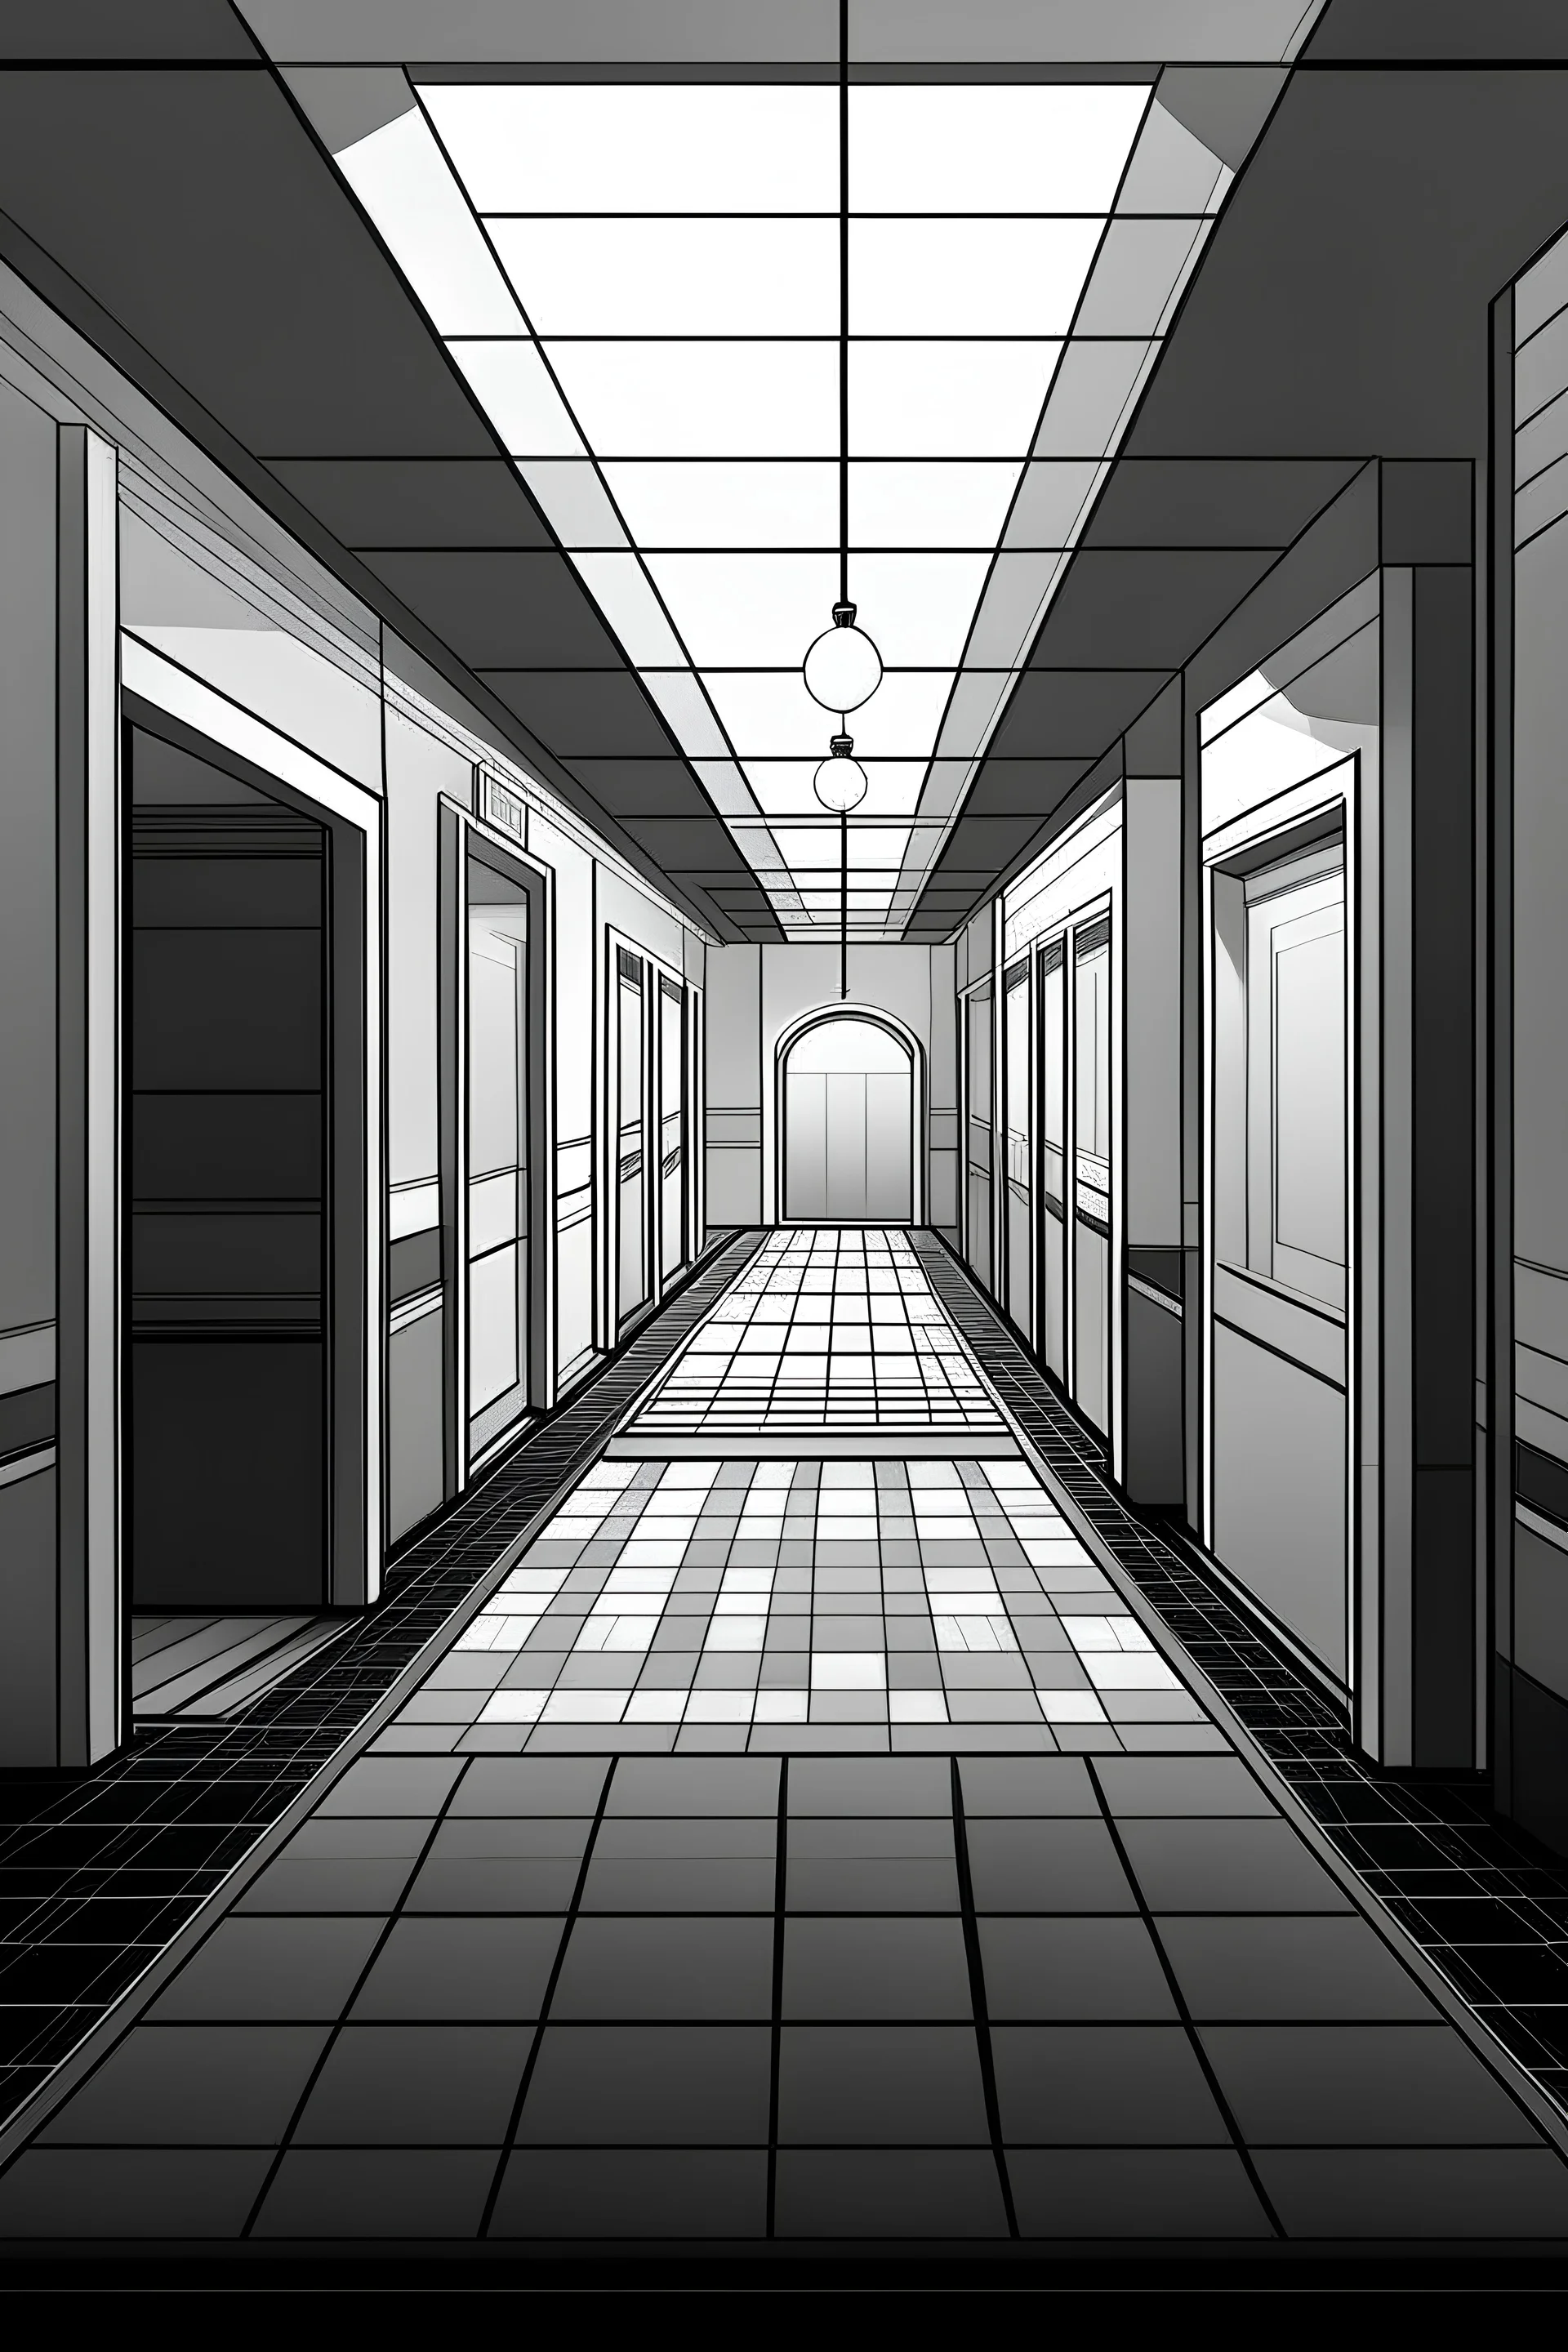 black and white platformer 2d background of a hallway